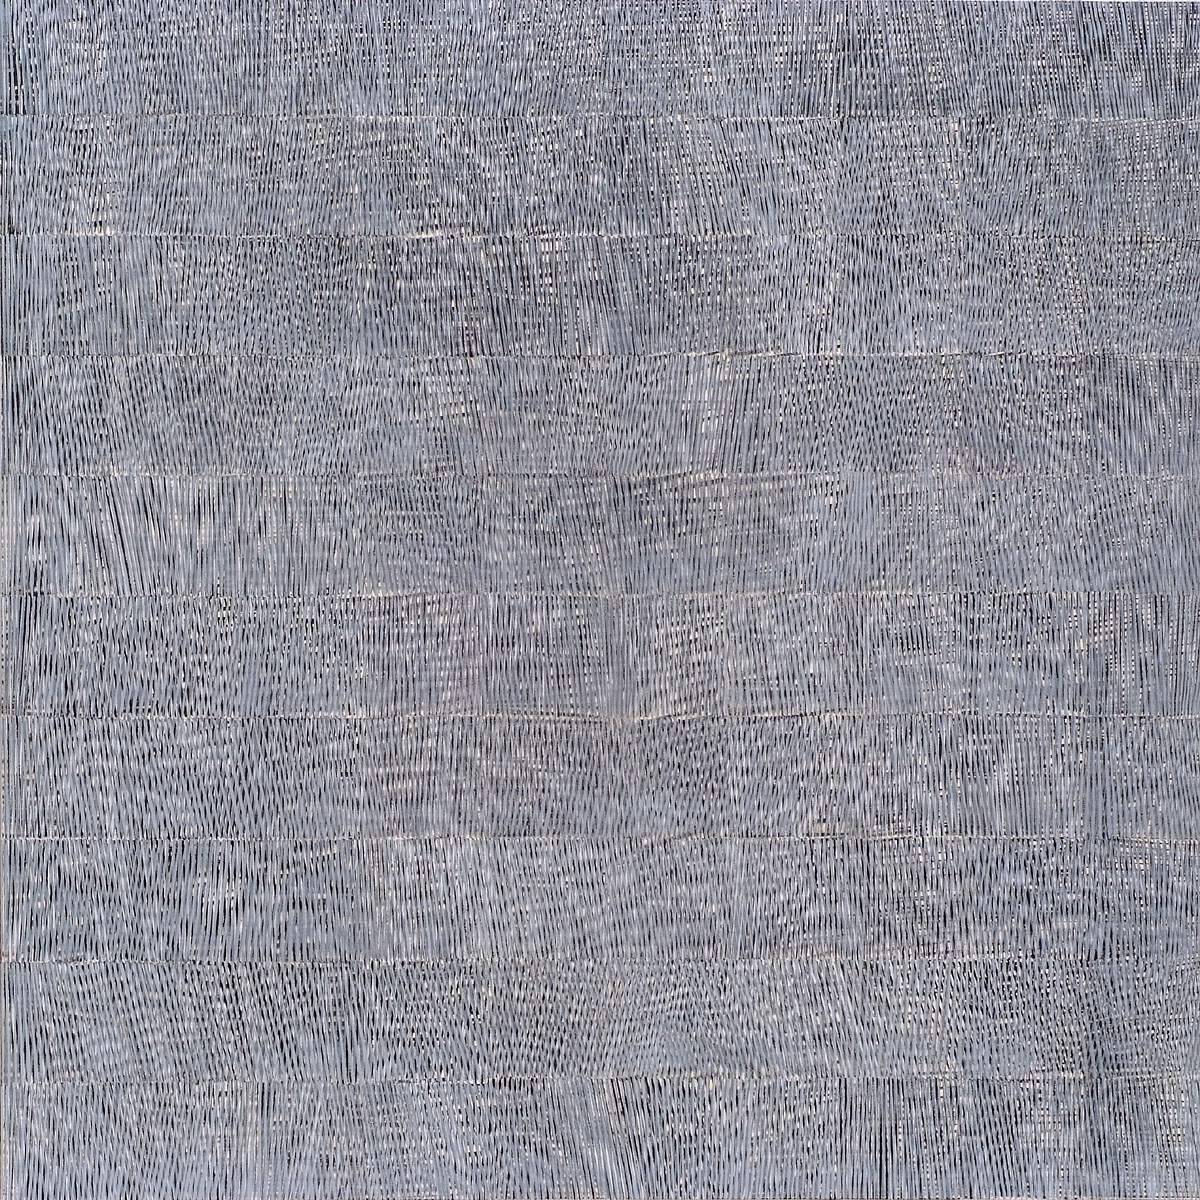 Nikola Dimitrov, Aria III, 2011, 250 x 250 cm, Pigmente, Bindemittel, Lösungsmittel auf Leinwand